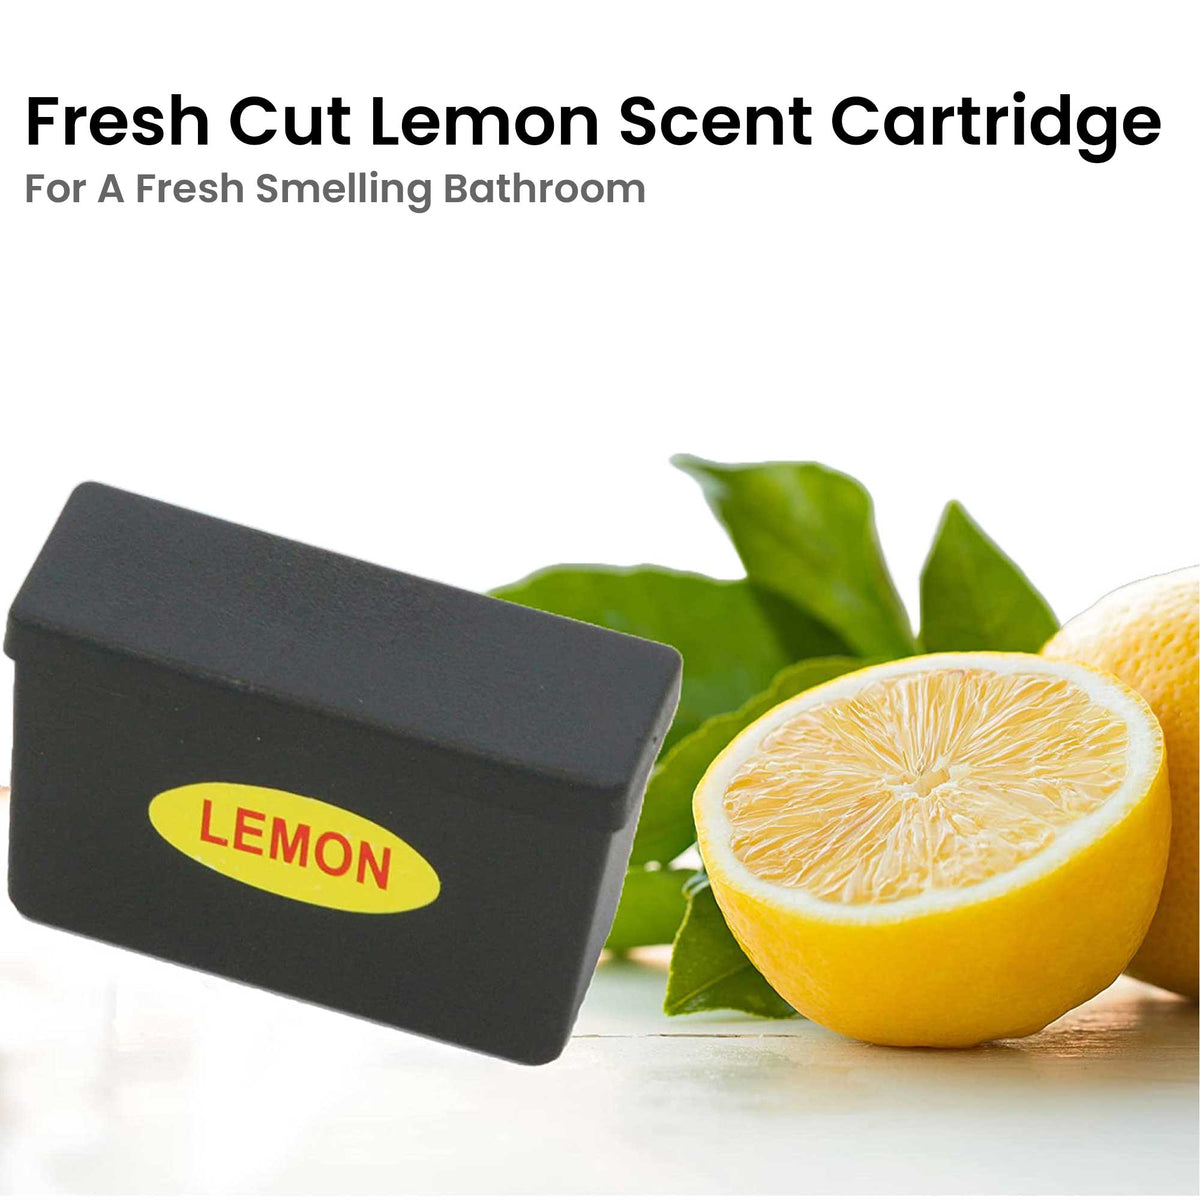 4 Gallon / 15 Liter White Sensor Bathroom Trash Can with Odor Filter and Lemon Fragrance for a fresh smelling bathroom